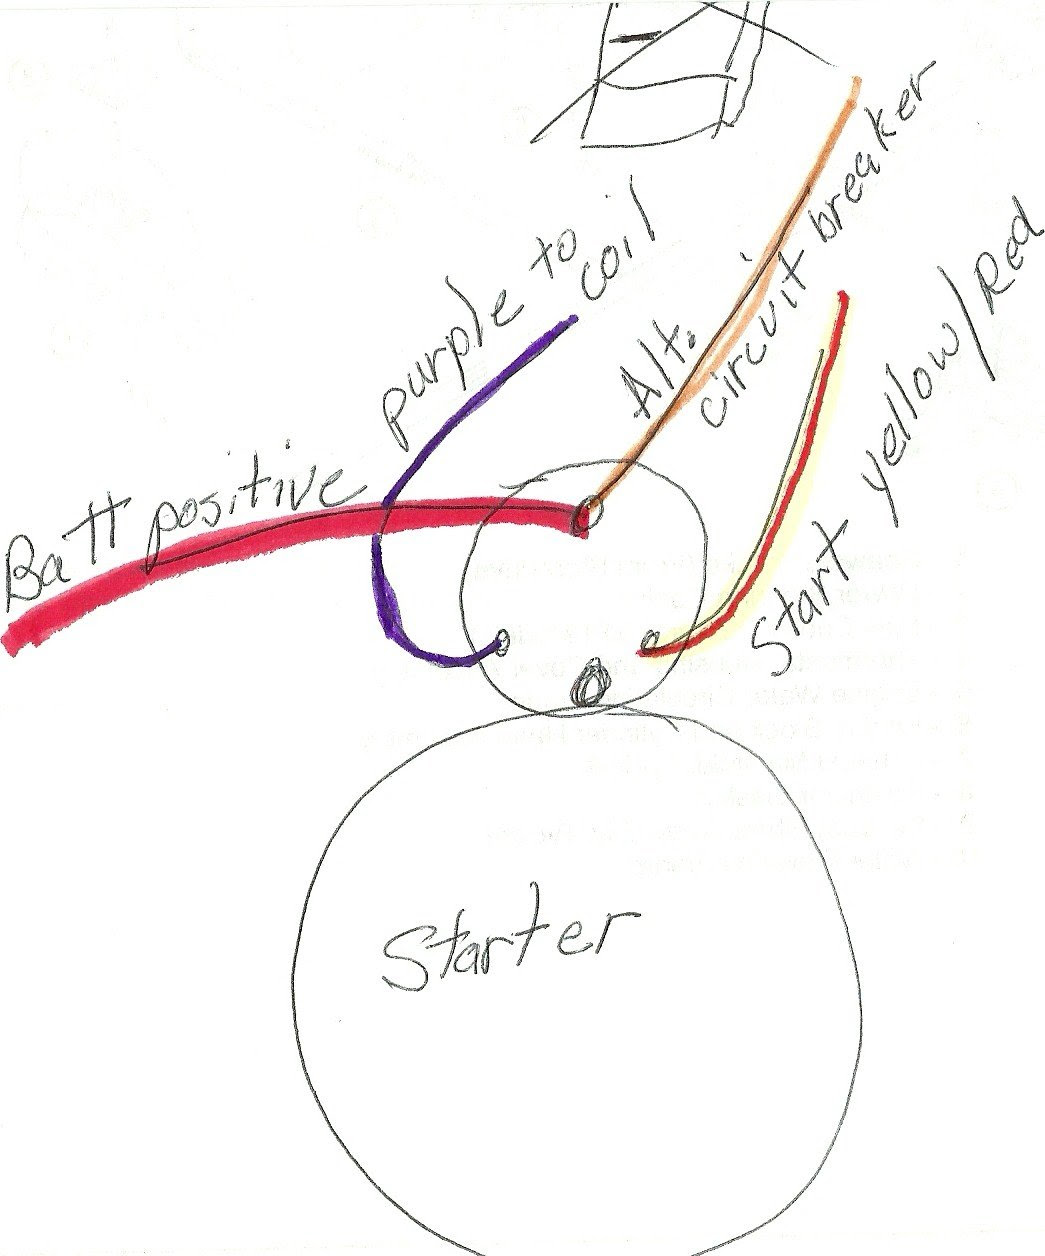 Mercruiser Starter Solenoid Wiring Diagram from lh6.googleusercontent.com